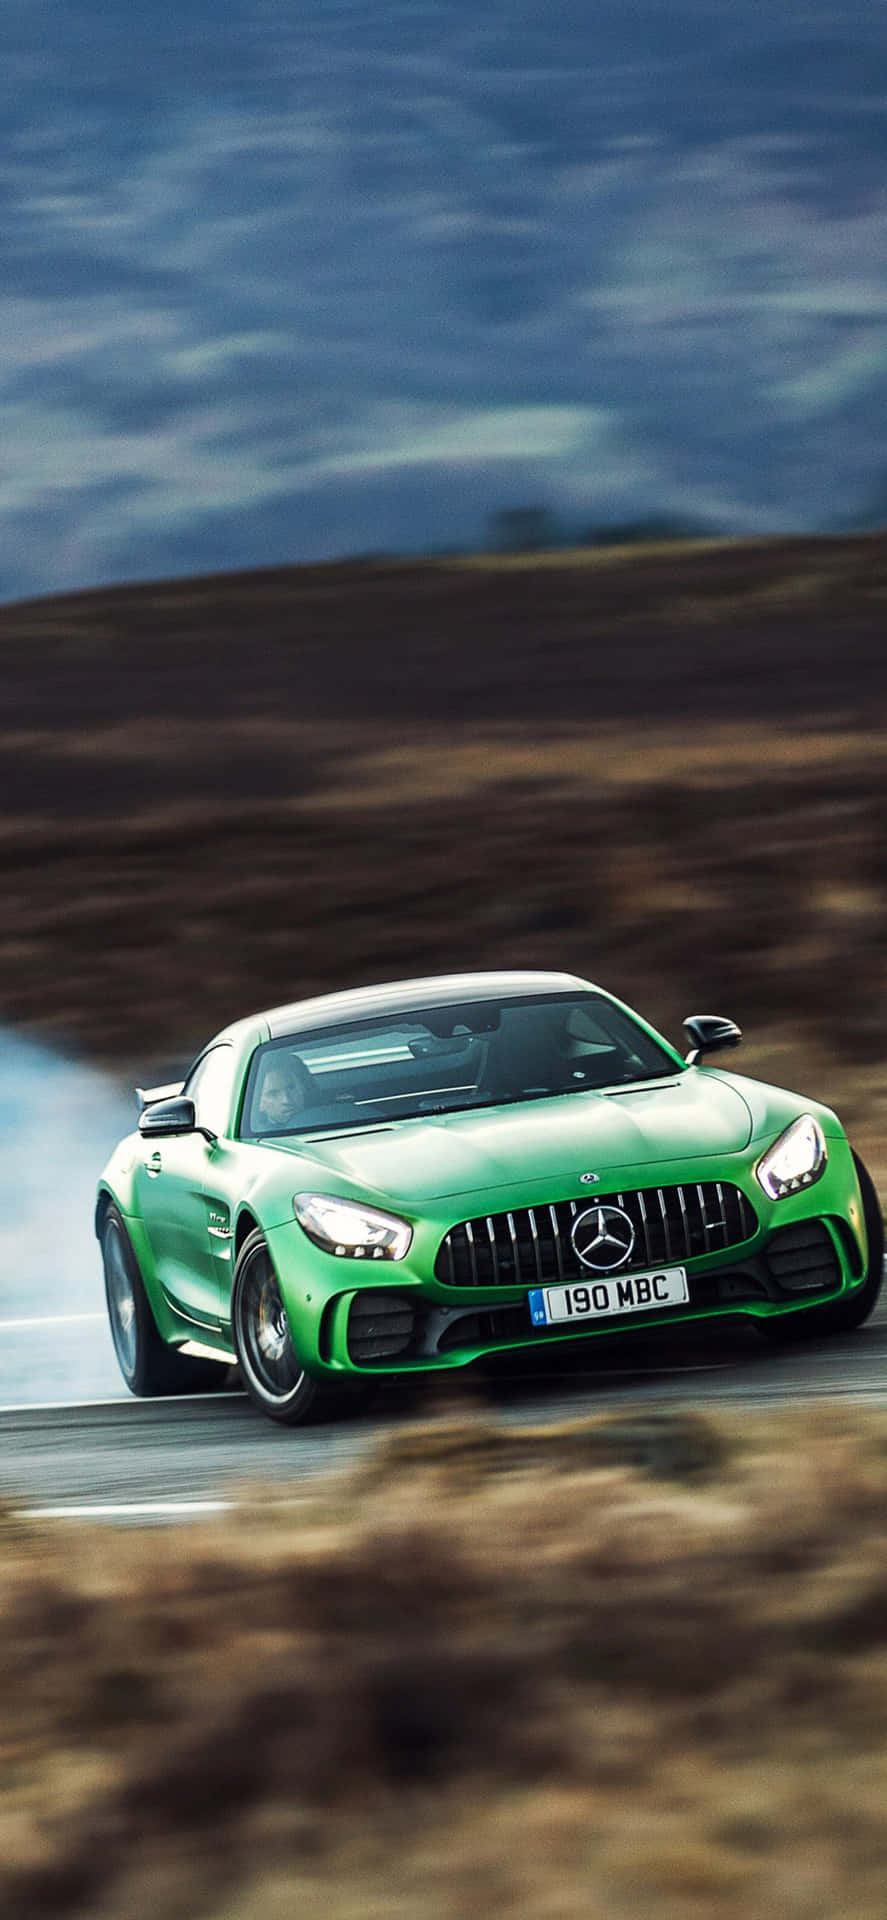 Upplevenastående Prestanda Med Mercedes-gts Som Bakgrundsbild På Din Dator Eller Mobil. Wallpaper